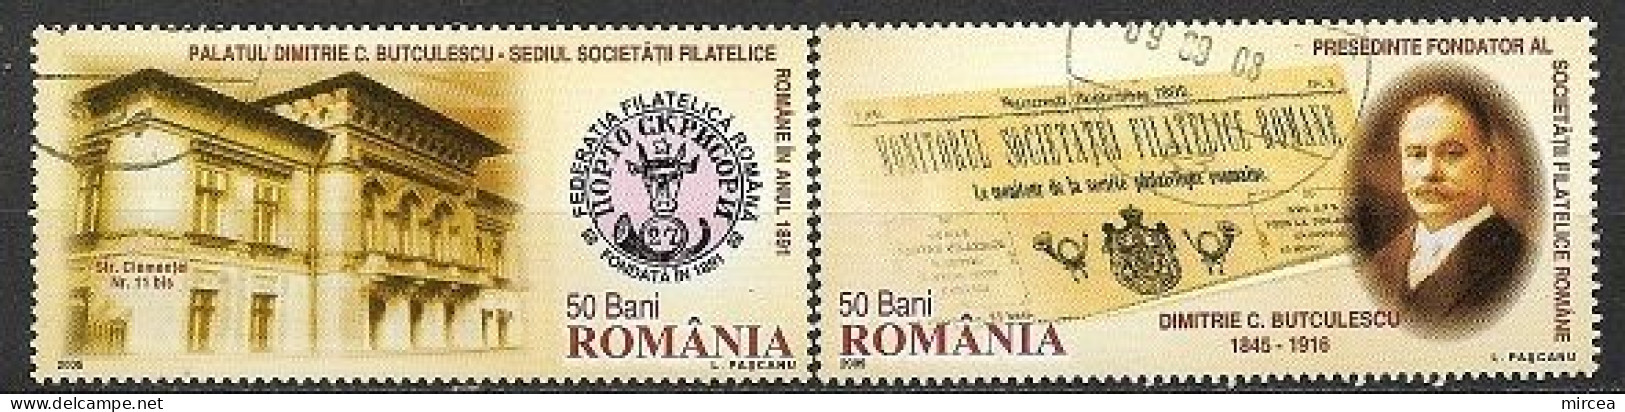 C3981 - Roumanie 2005 - 2v.obliteres - Used Stamps